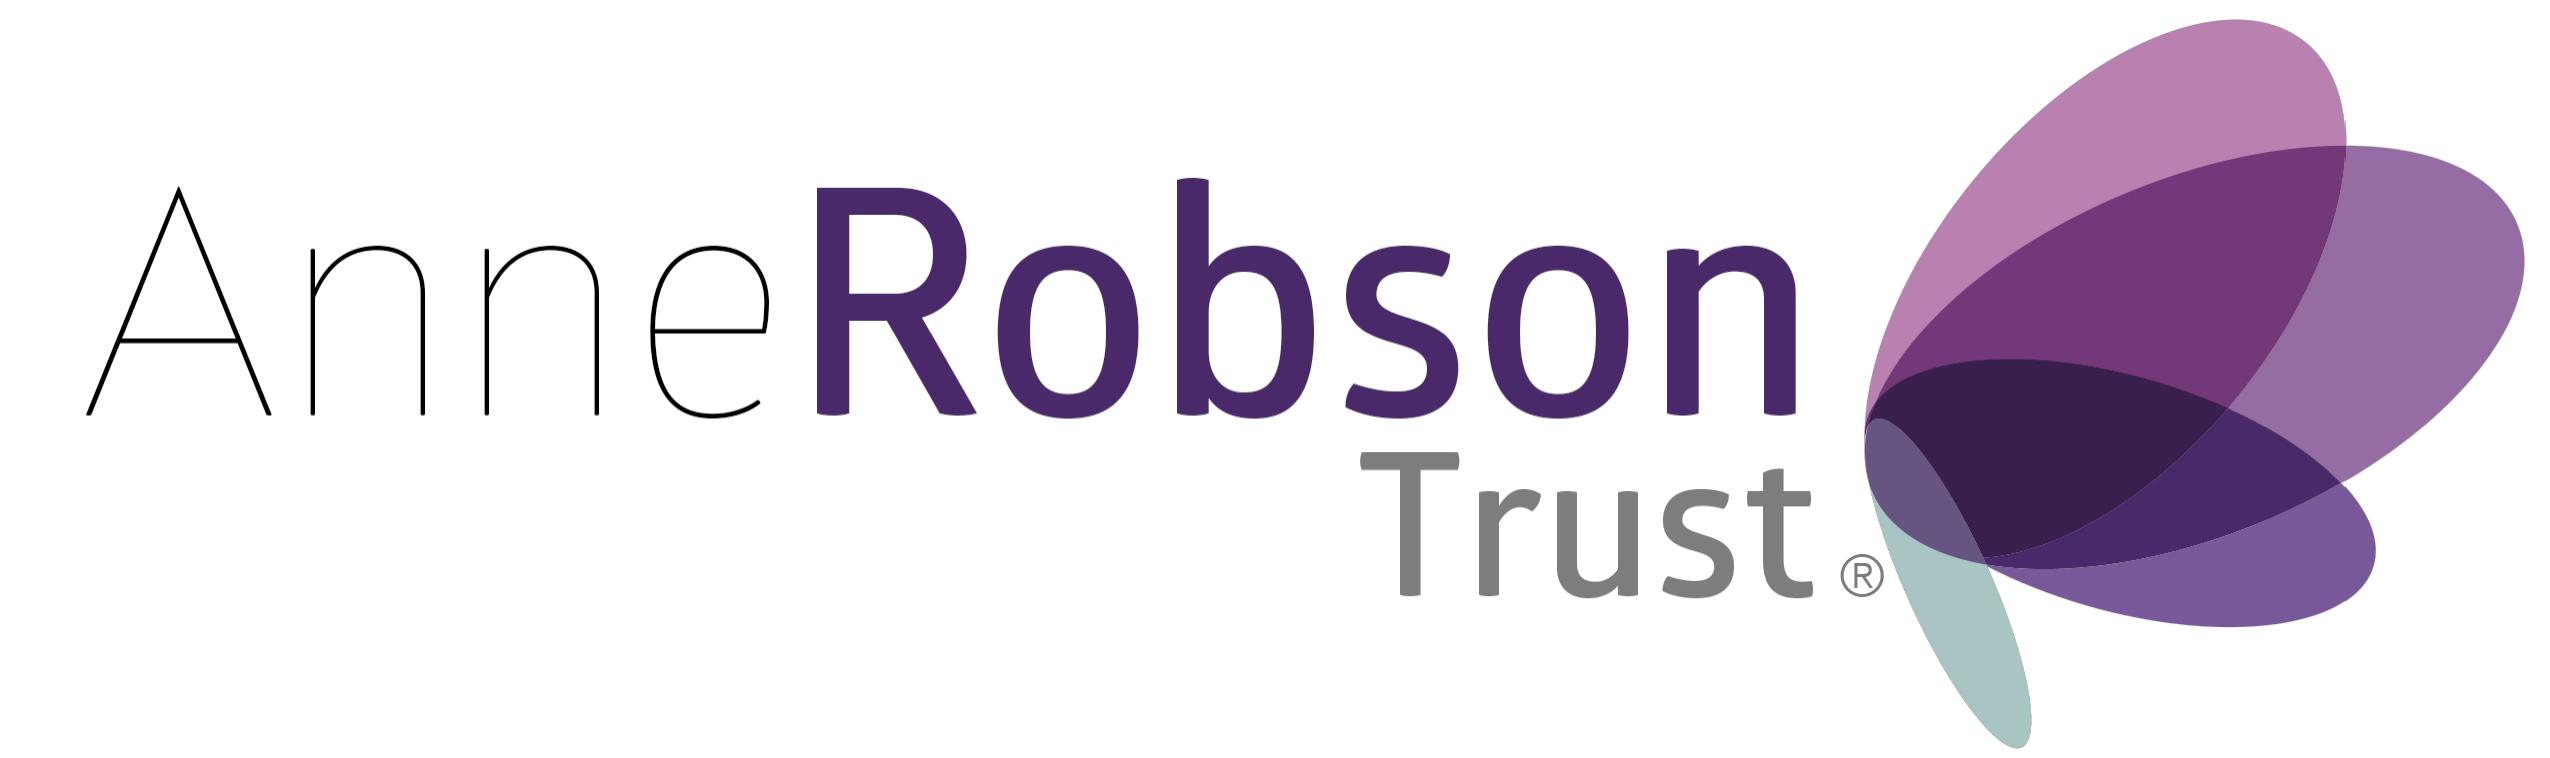 logo for Anne Robson Trust